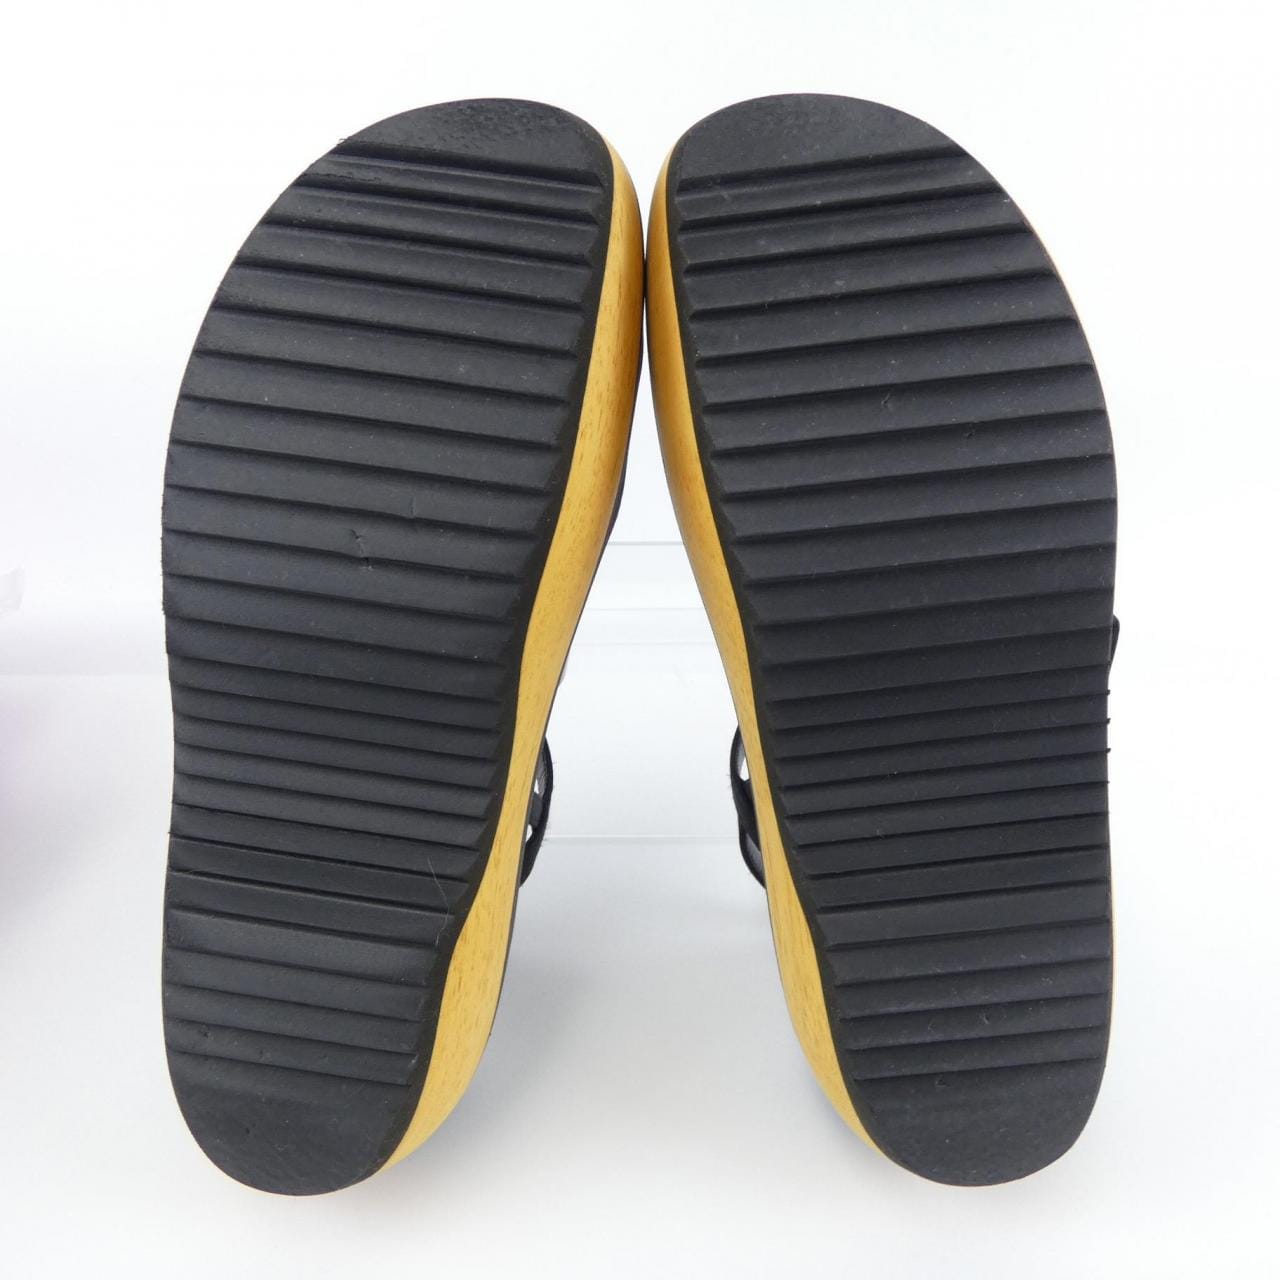 Marni sandals